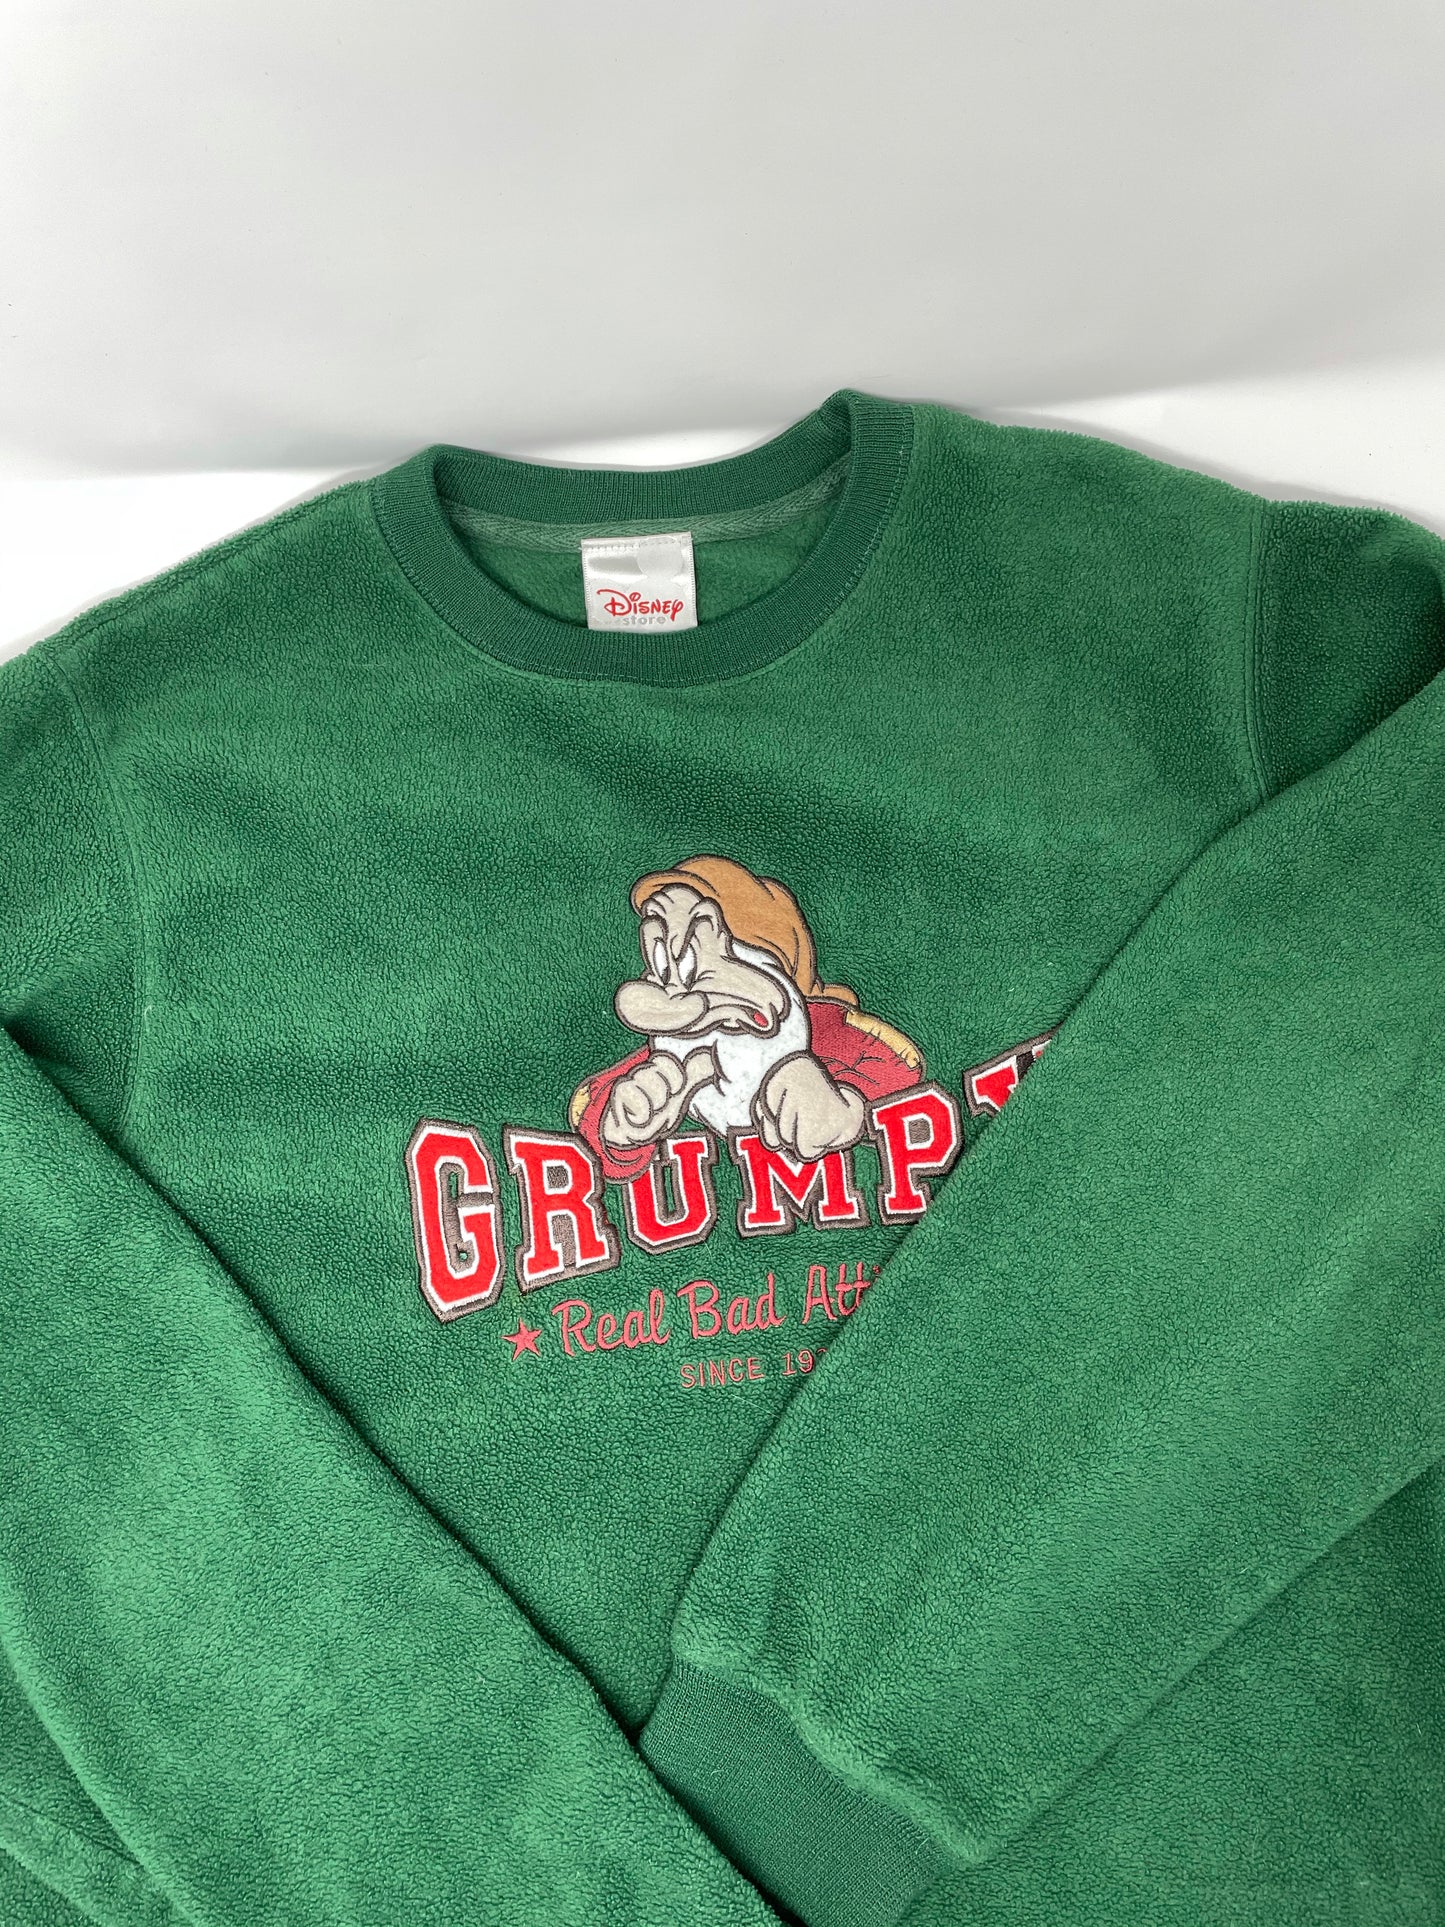 The Grumpy Sweatshirt